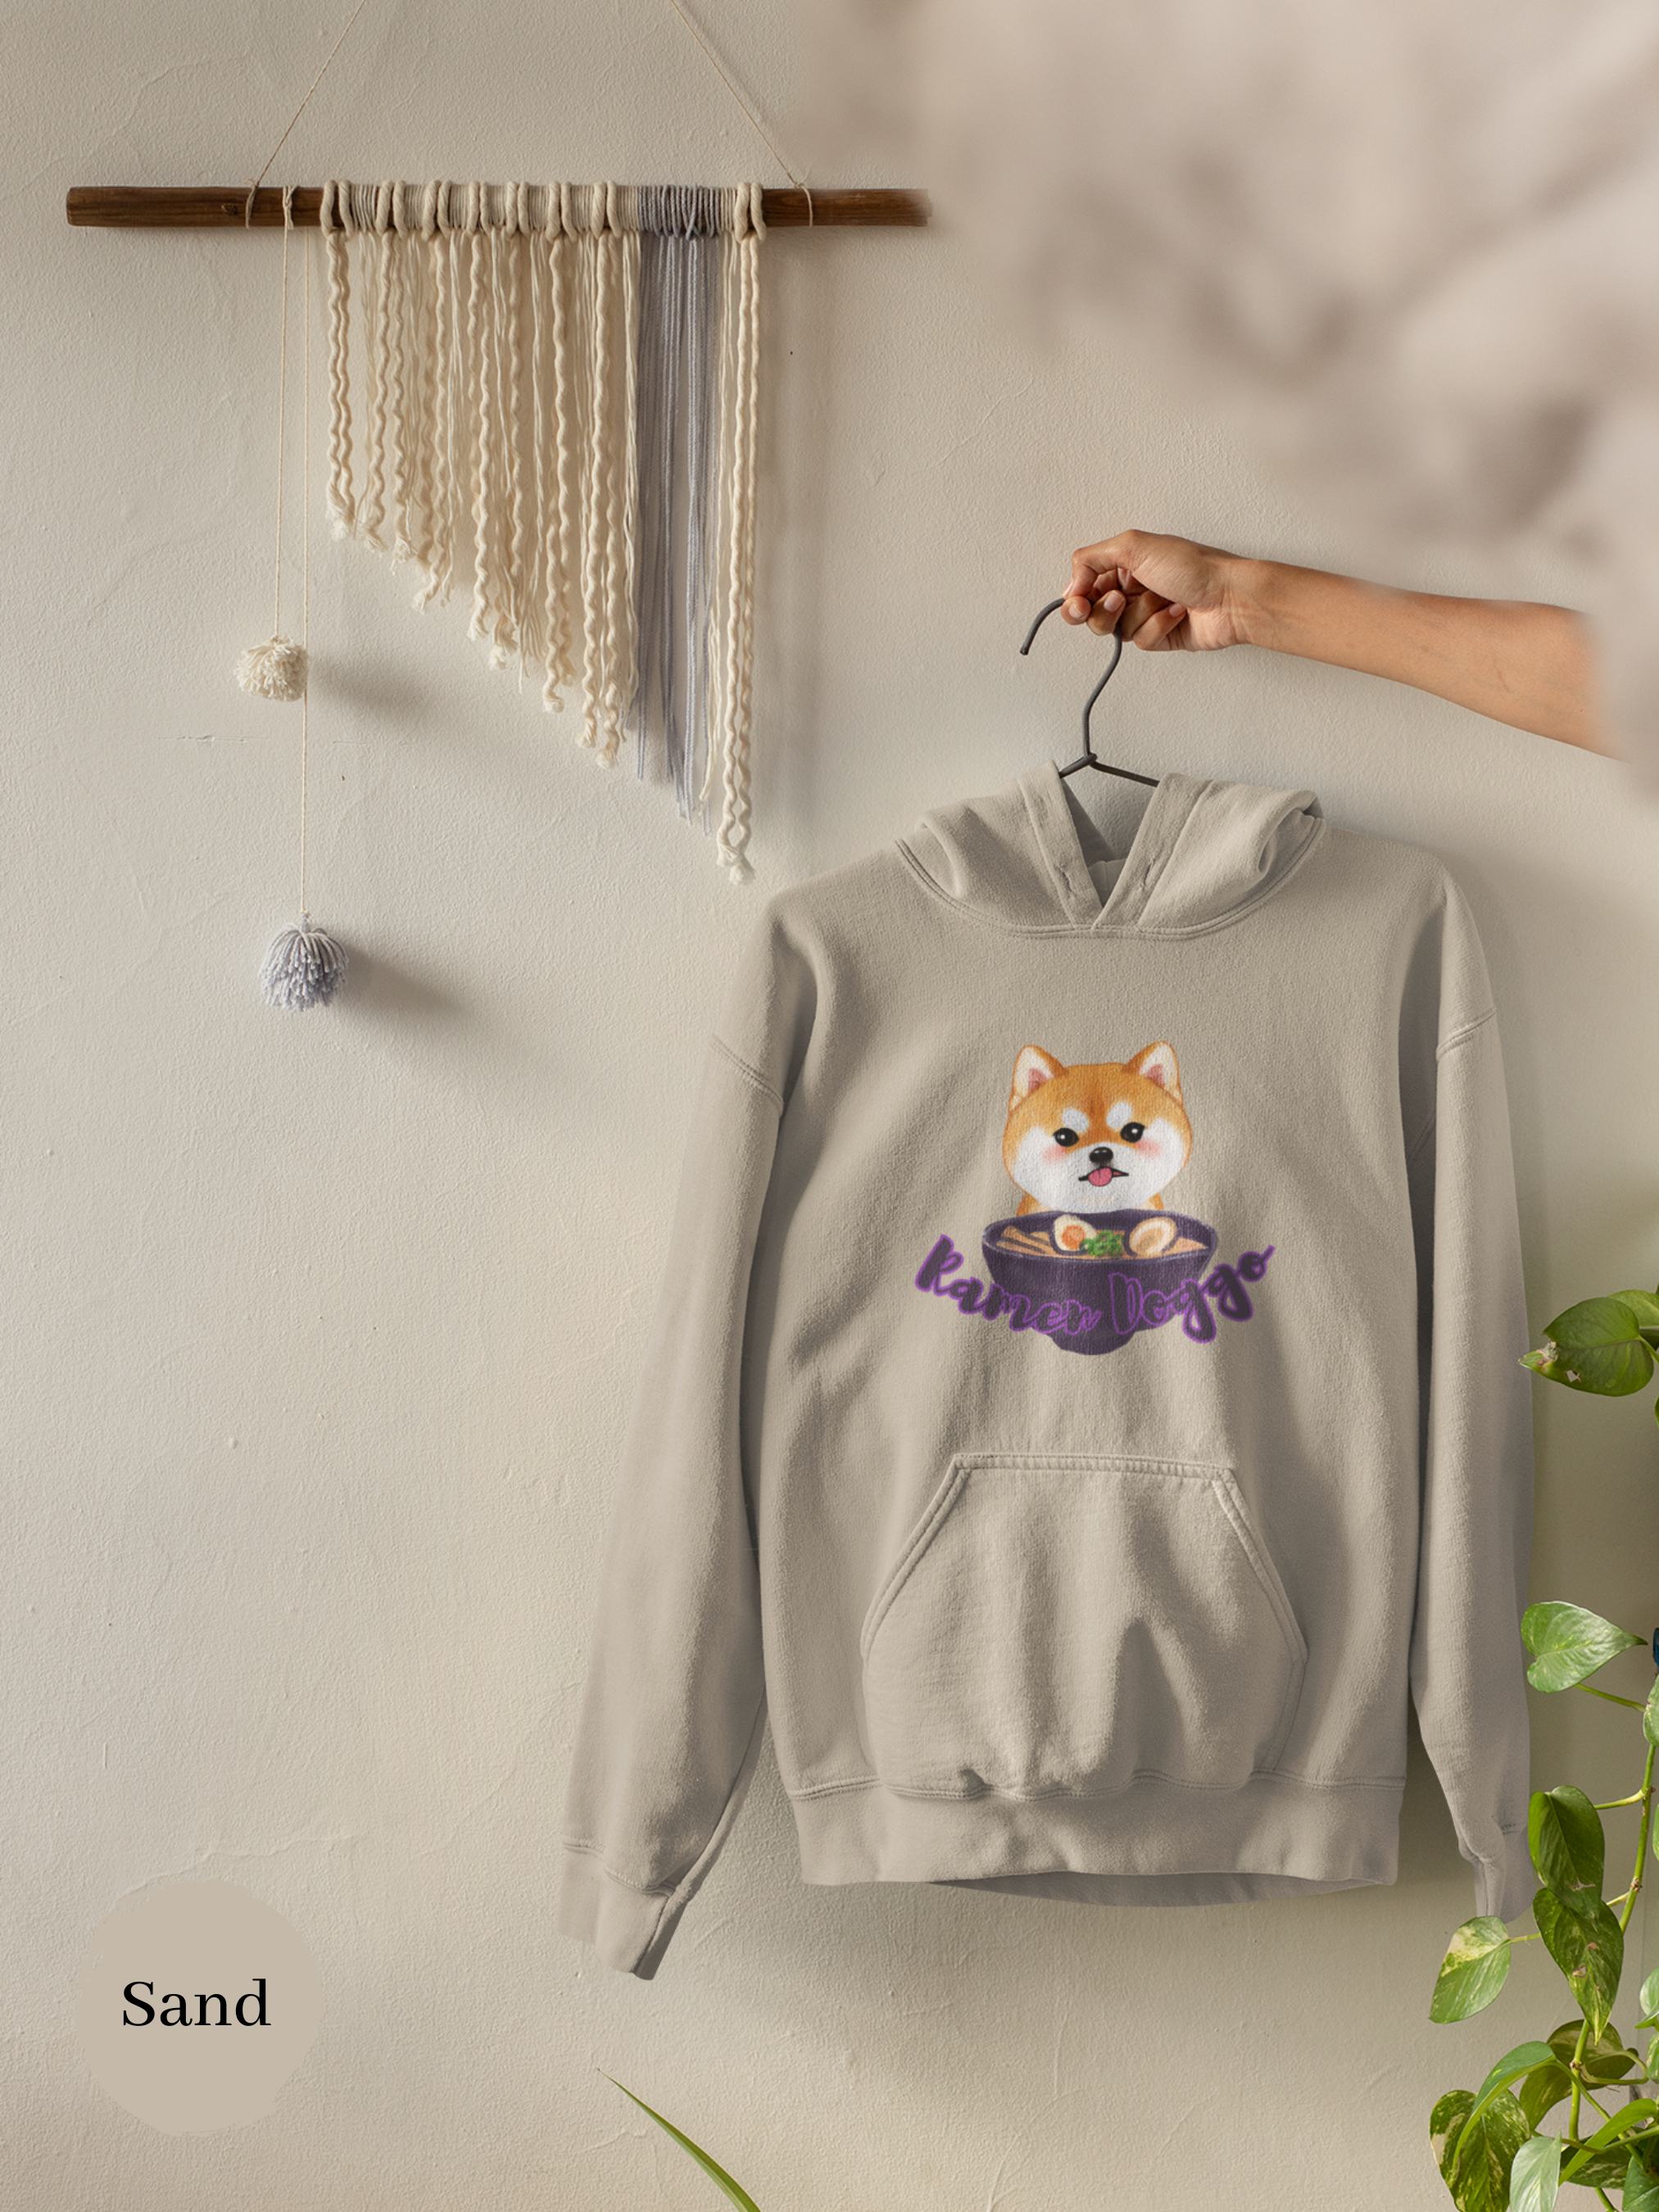 Ramen Hoodie: Shiba Inu Edition - Cute Ramen Doggo in Asian Food Inspired Sweatshirt with Pun Design